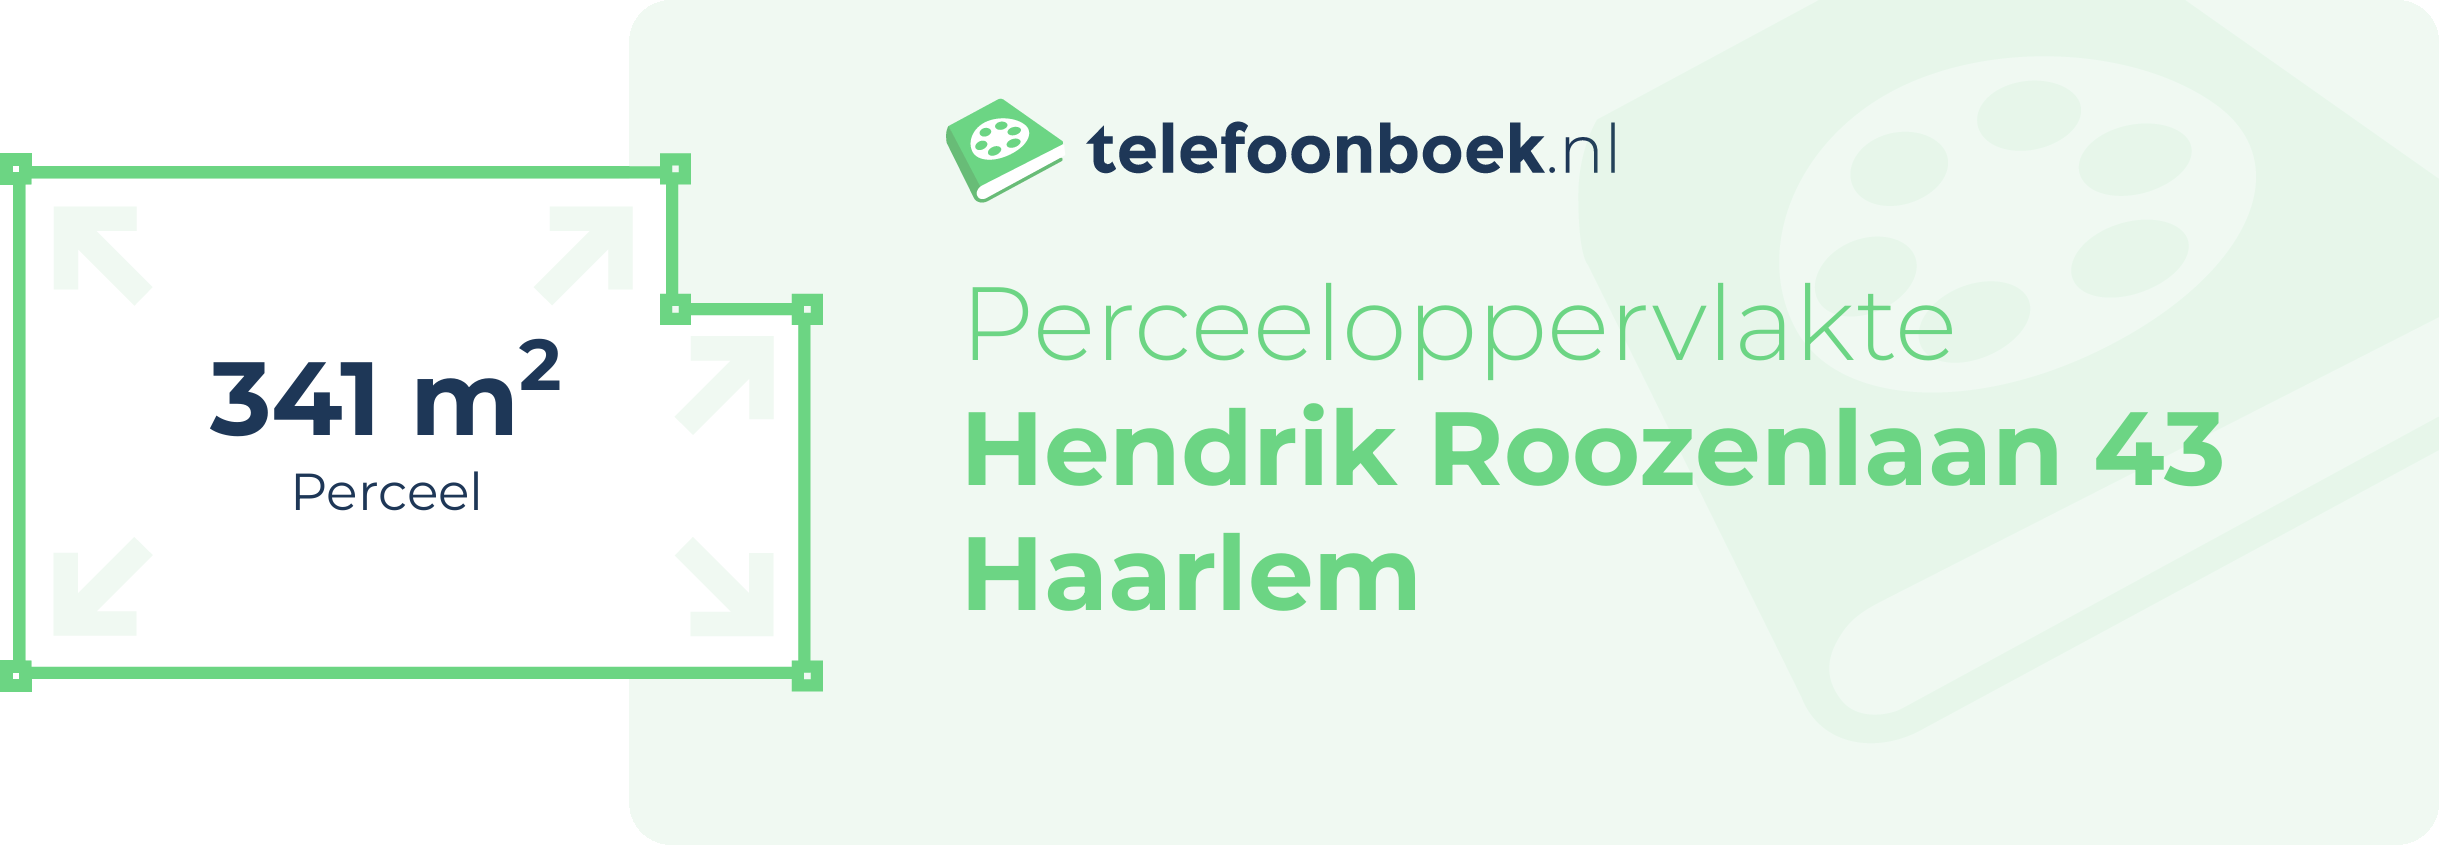 Perceeloppervlakte Hendrik Roozenlaan 43 Haarlem